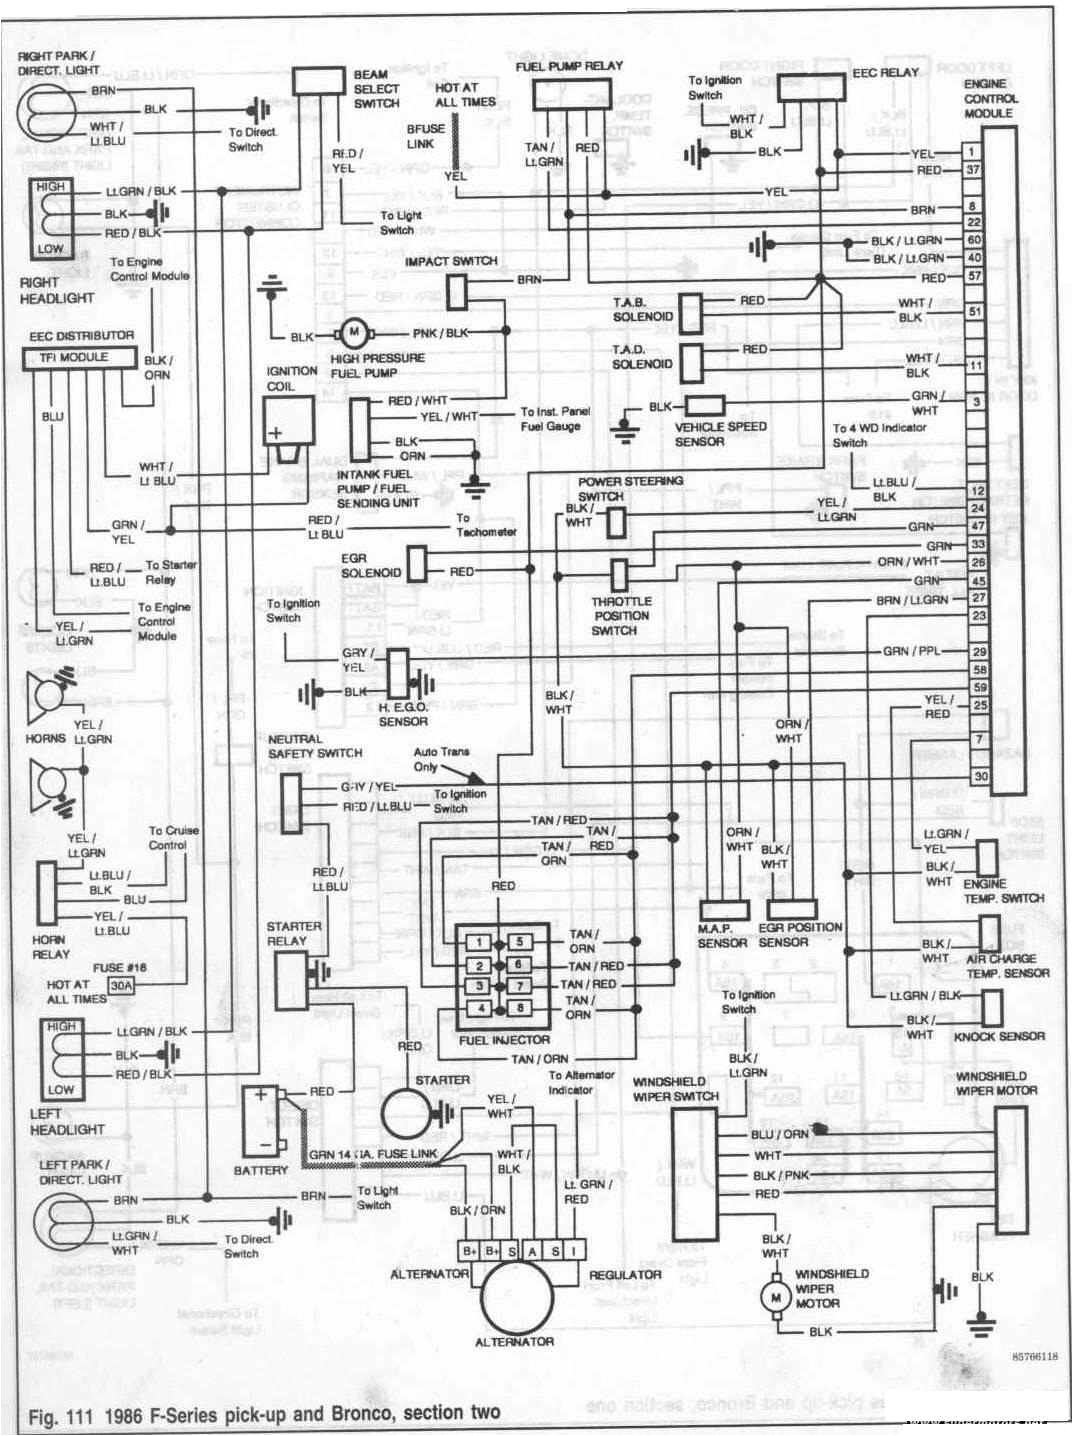 1986 ford bronco wiring diagram ixdzpdx jpg